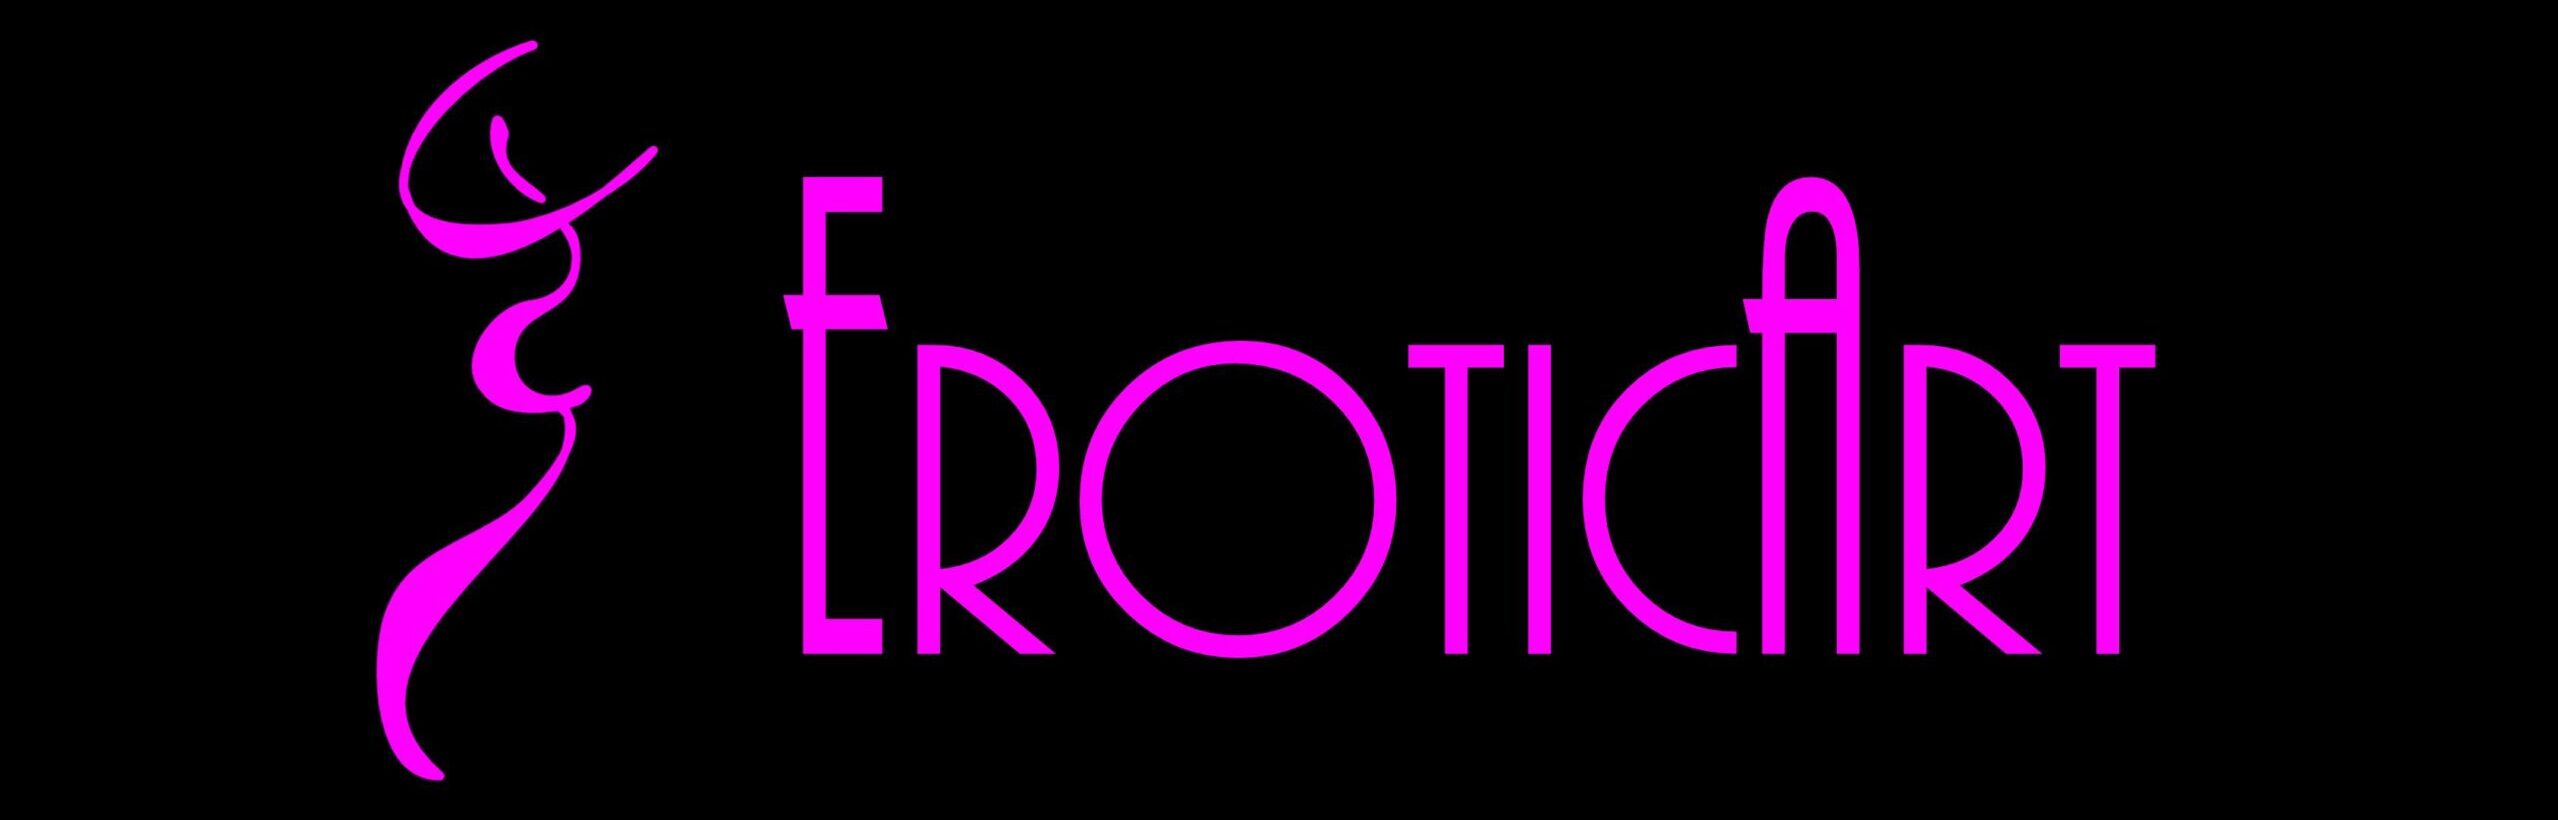 EroticArt logo